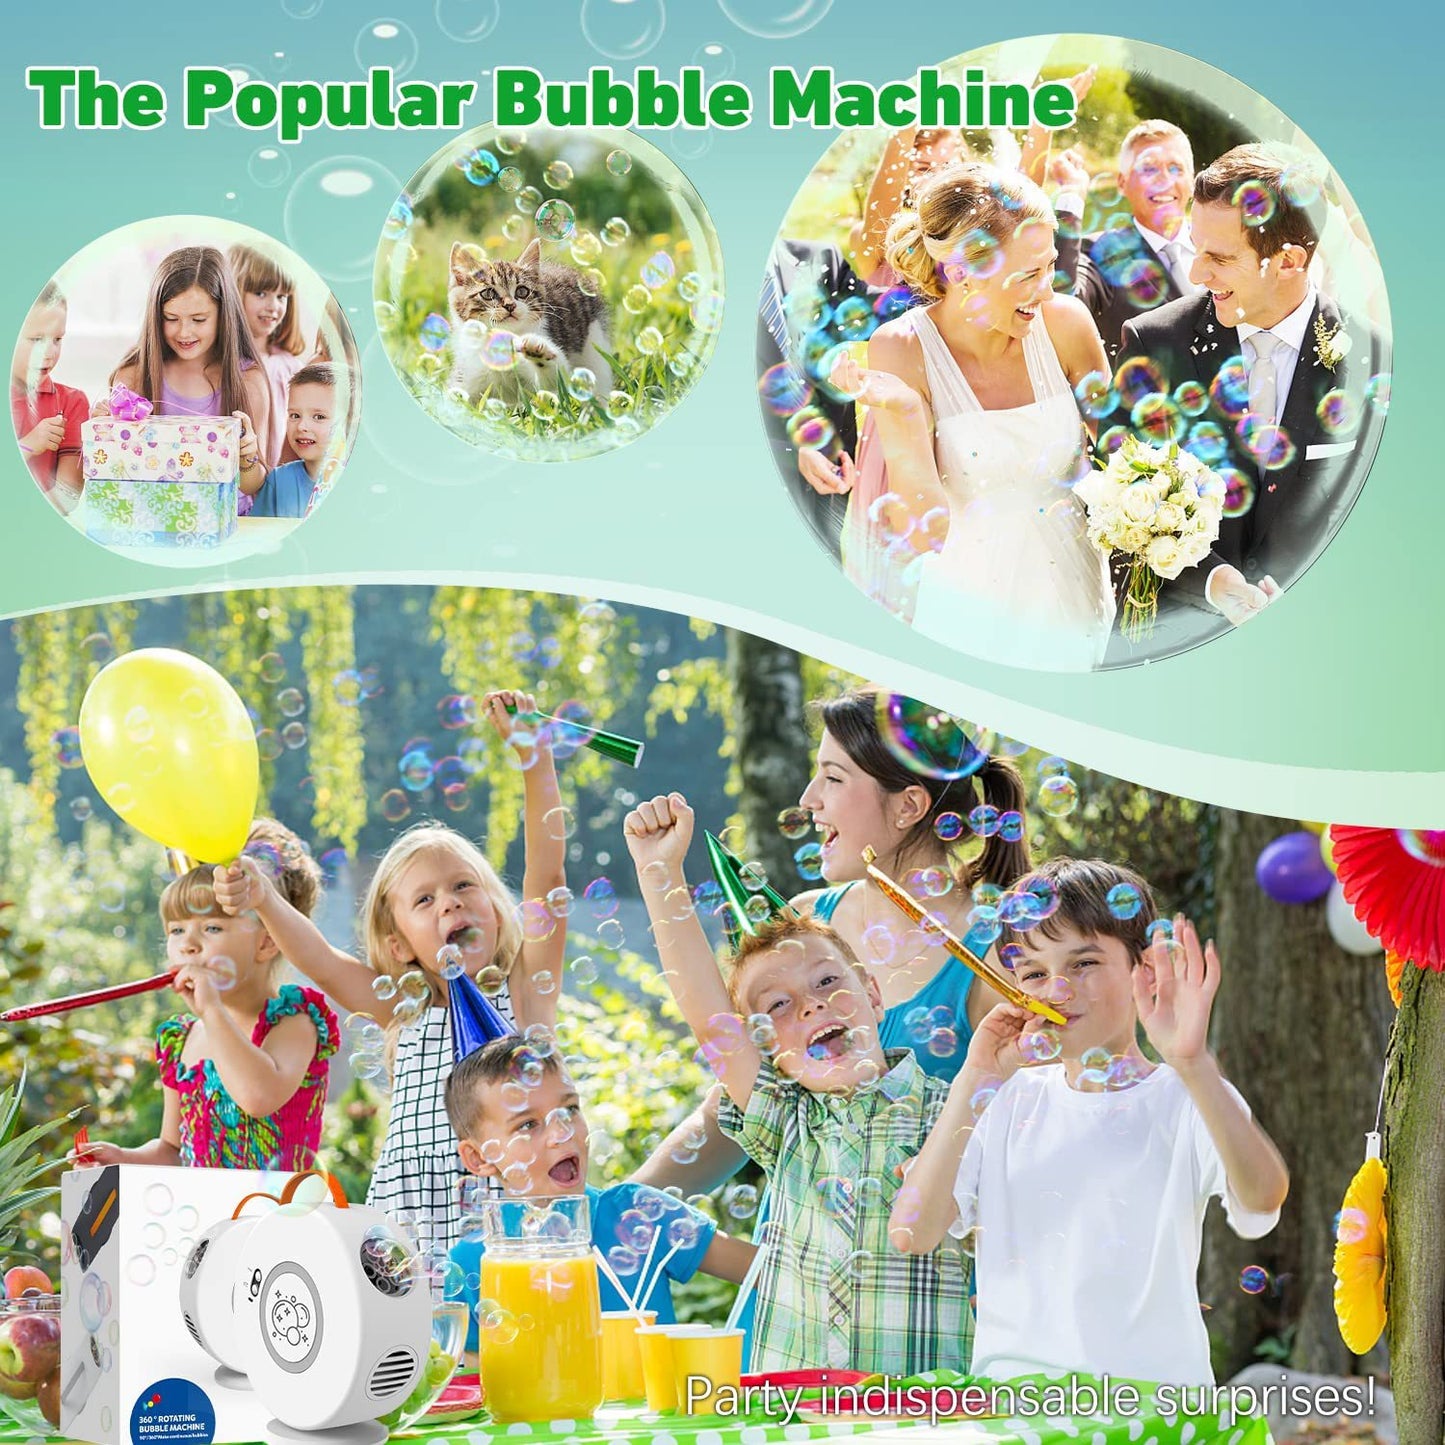 Rechargeable Bubble Machine: Endless Bubbles for Kids' Outdoor Fun